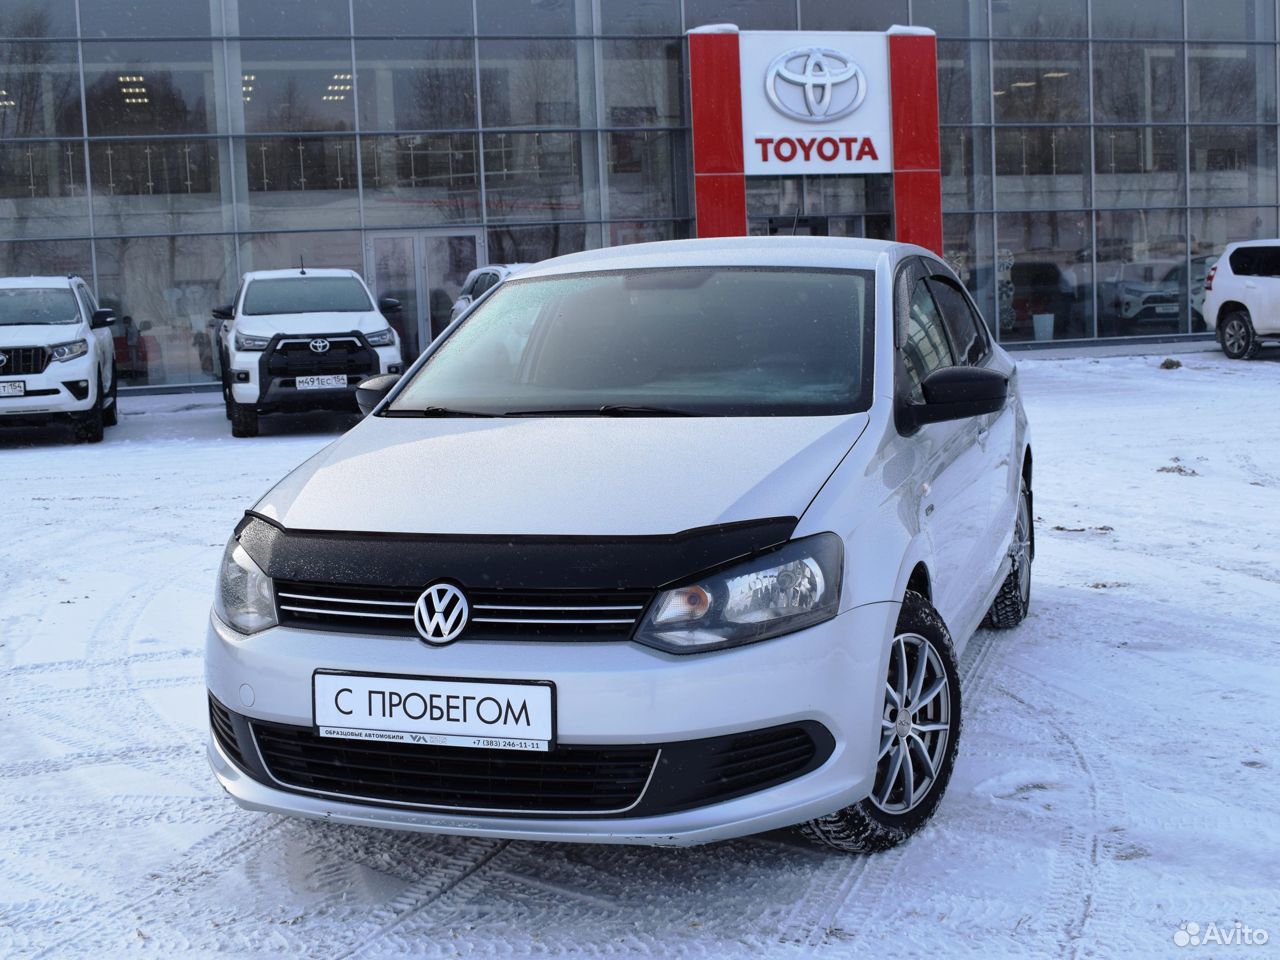 Volkswagen Polo 2018 1.6 at серебристый. Volkswagen Polo vi на снегу. Купить в Новосибирске Volkswagen Polo 2017 год погорелец. Volkswagen новосибирск